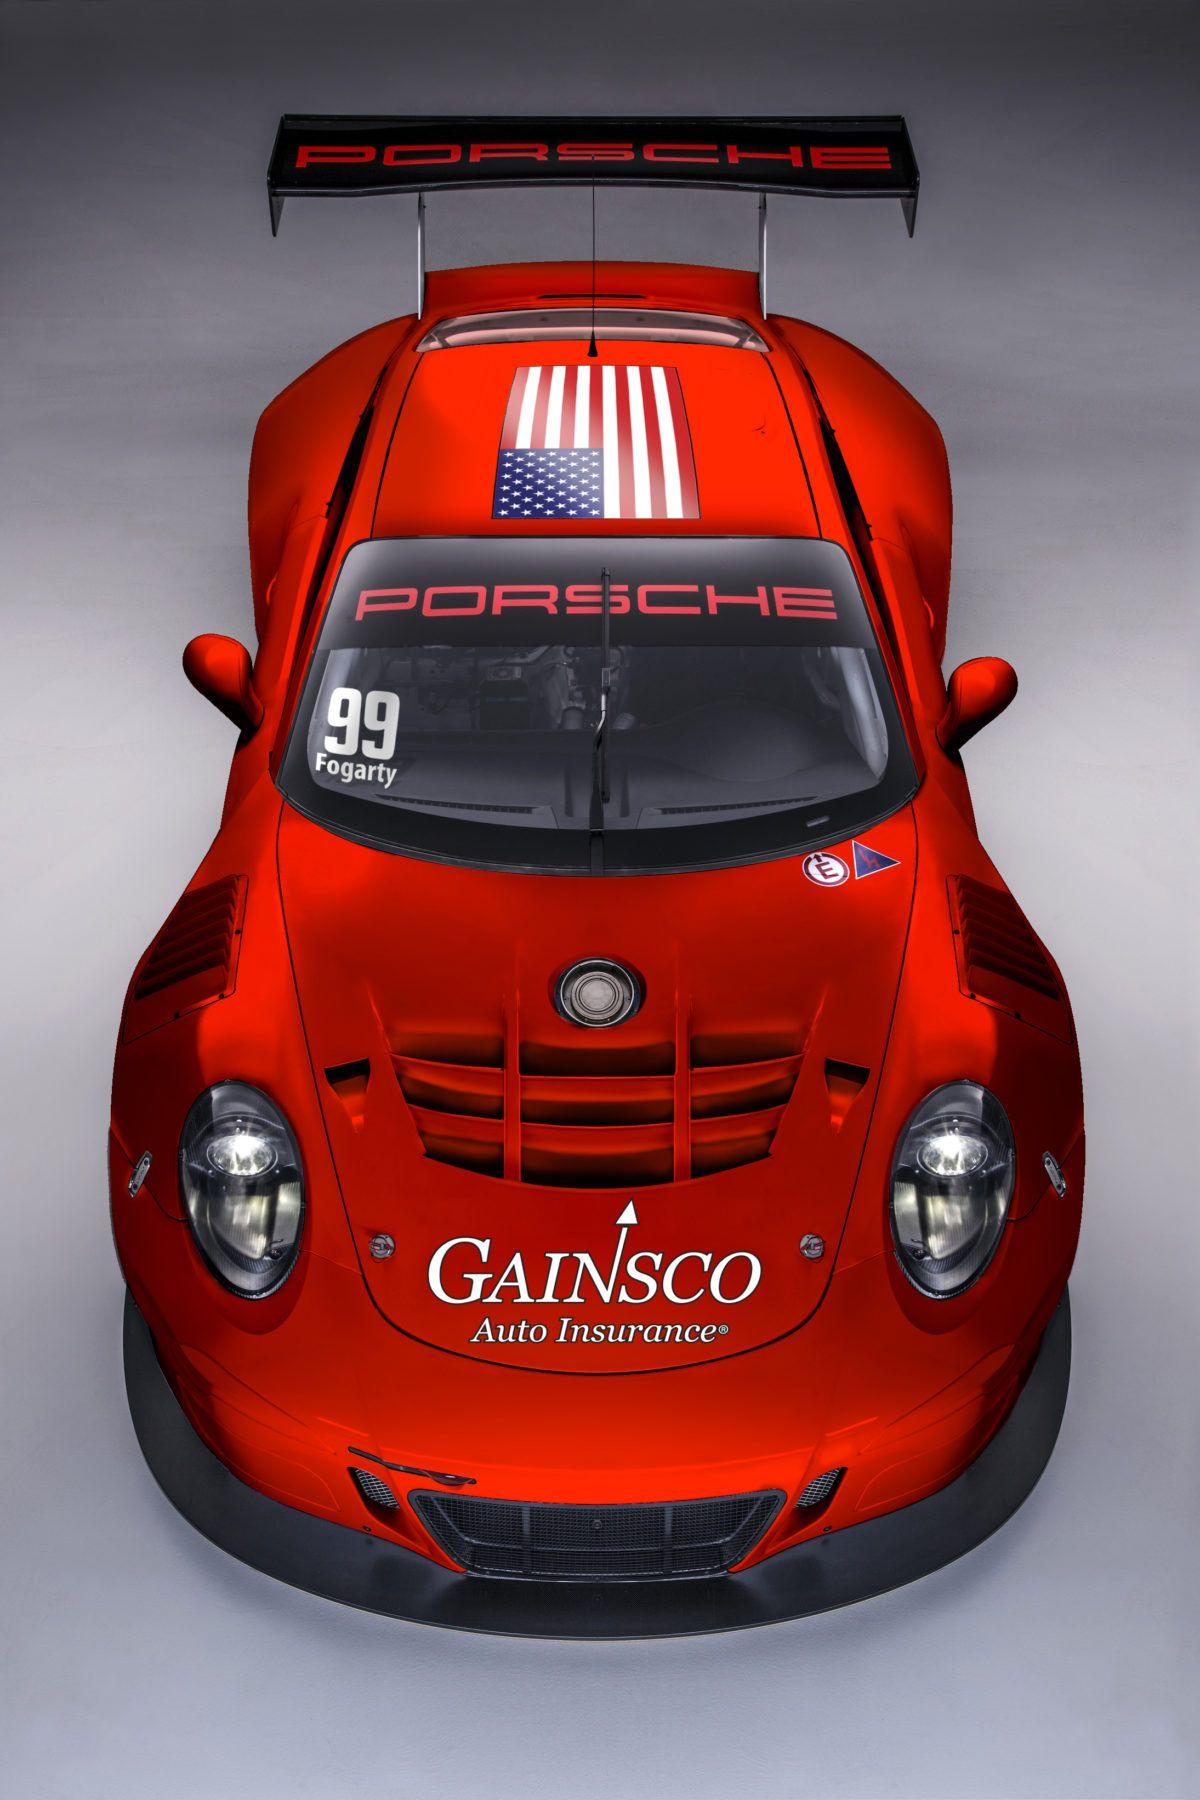 Gainsco Logo - GAINSCO Switches to Porsche for 2017